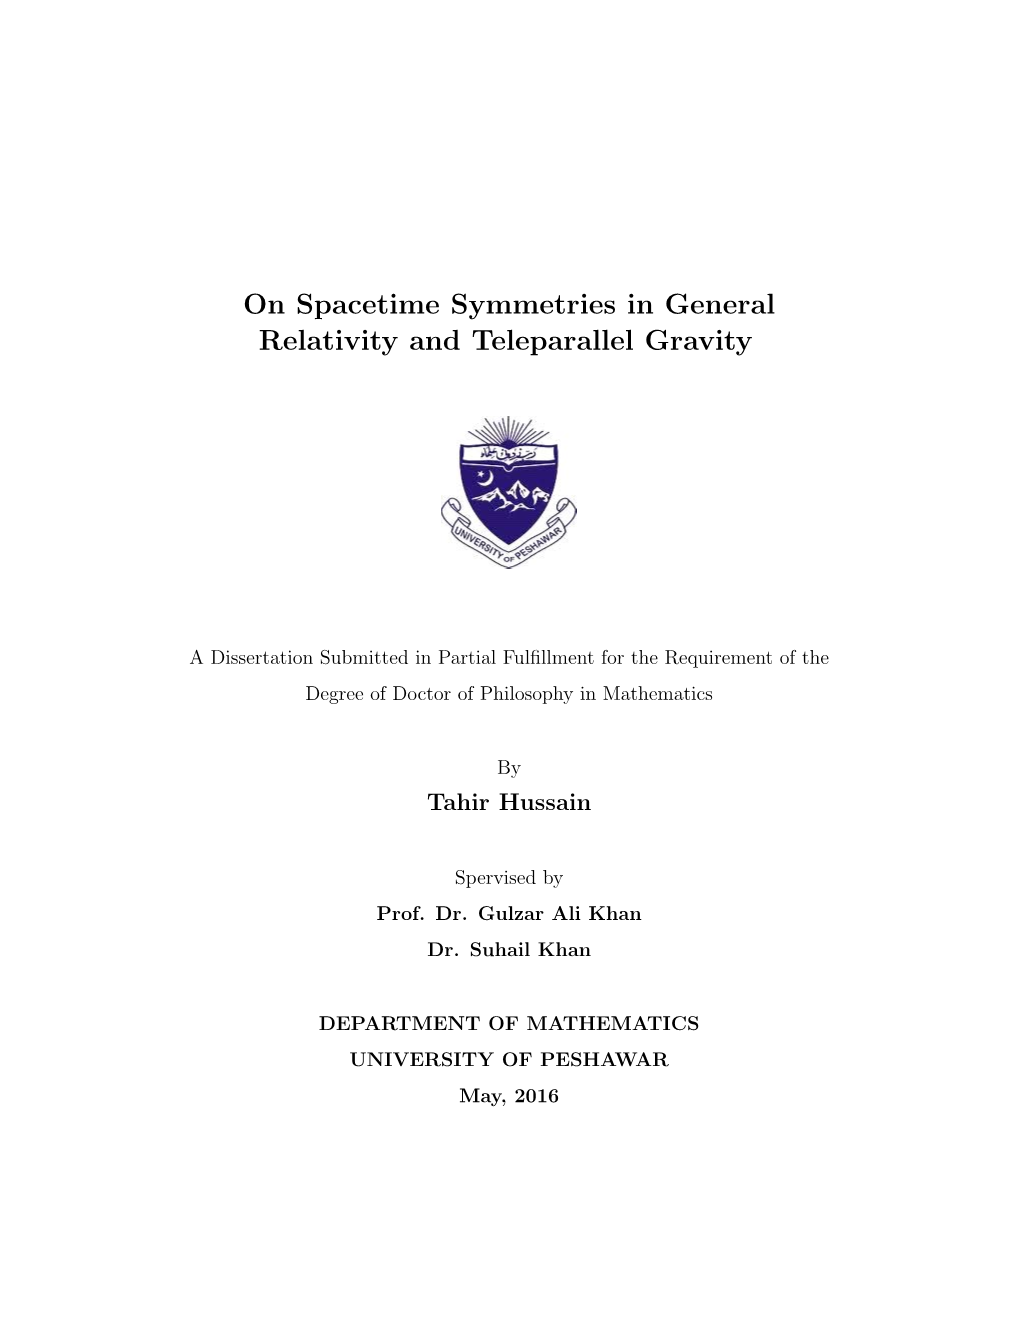 On Spacetime Symmetries in General Relativity and Teleparallel Gravity